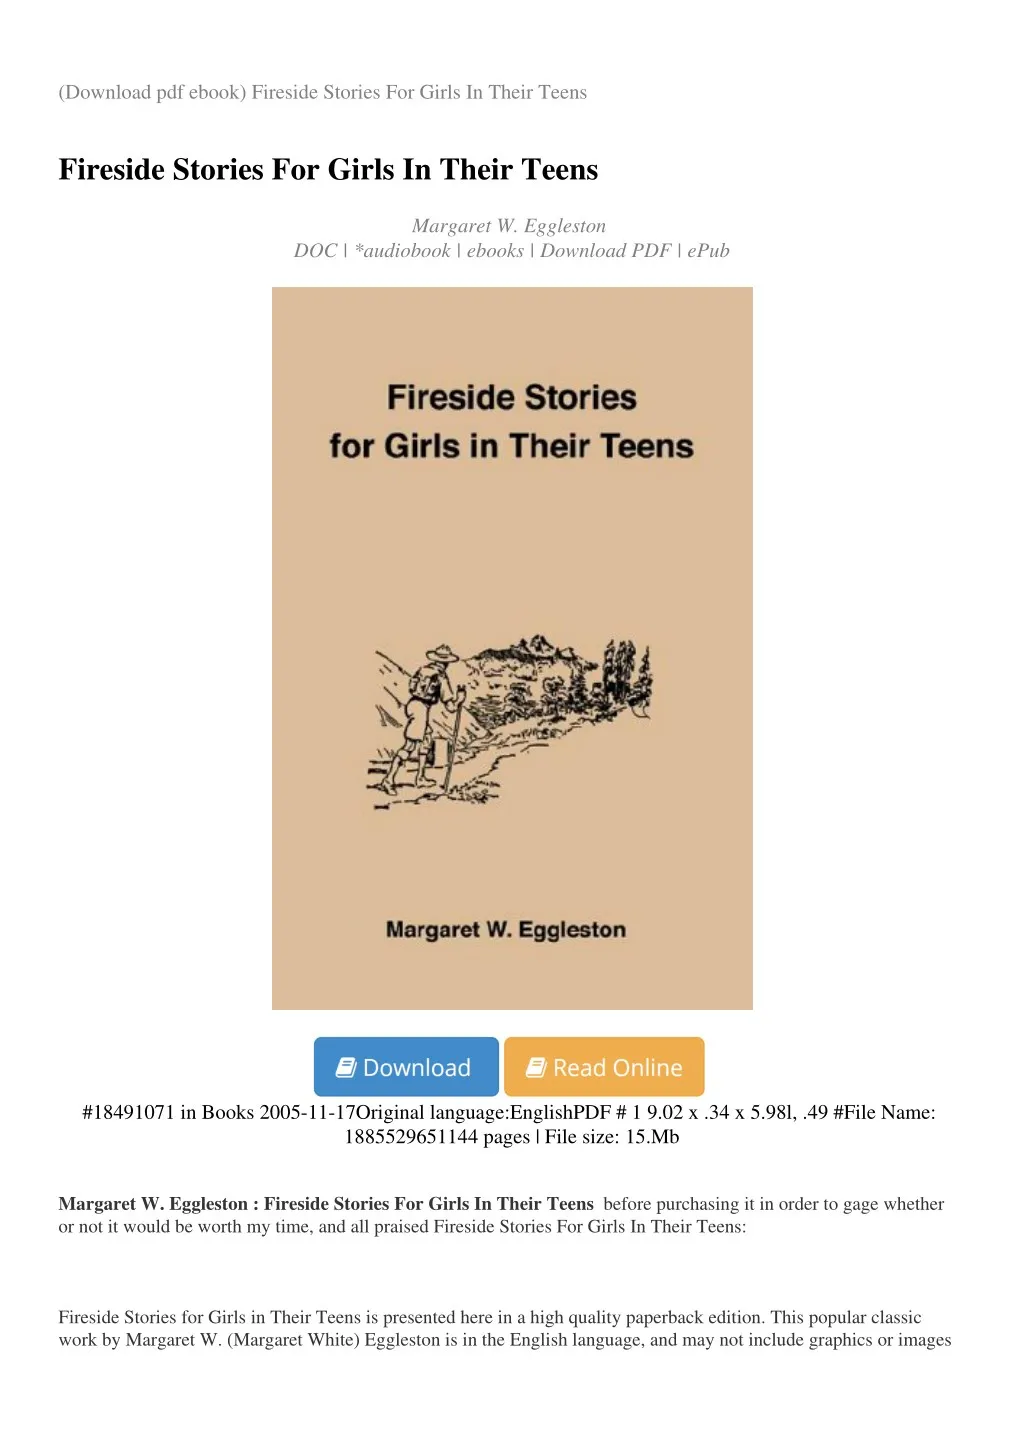 download pdf ebook fireside stories for girls